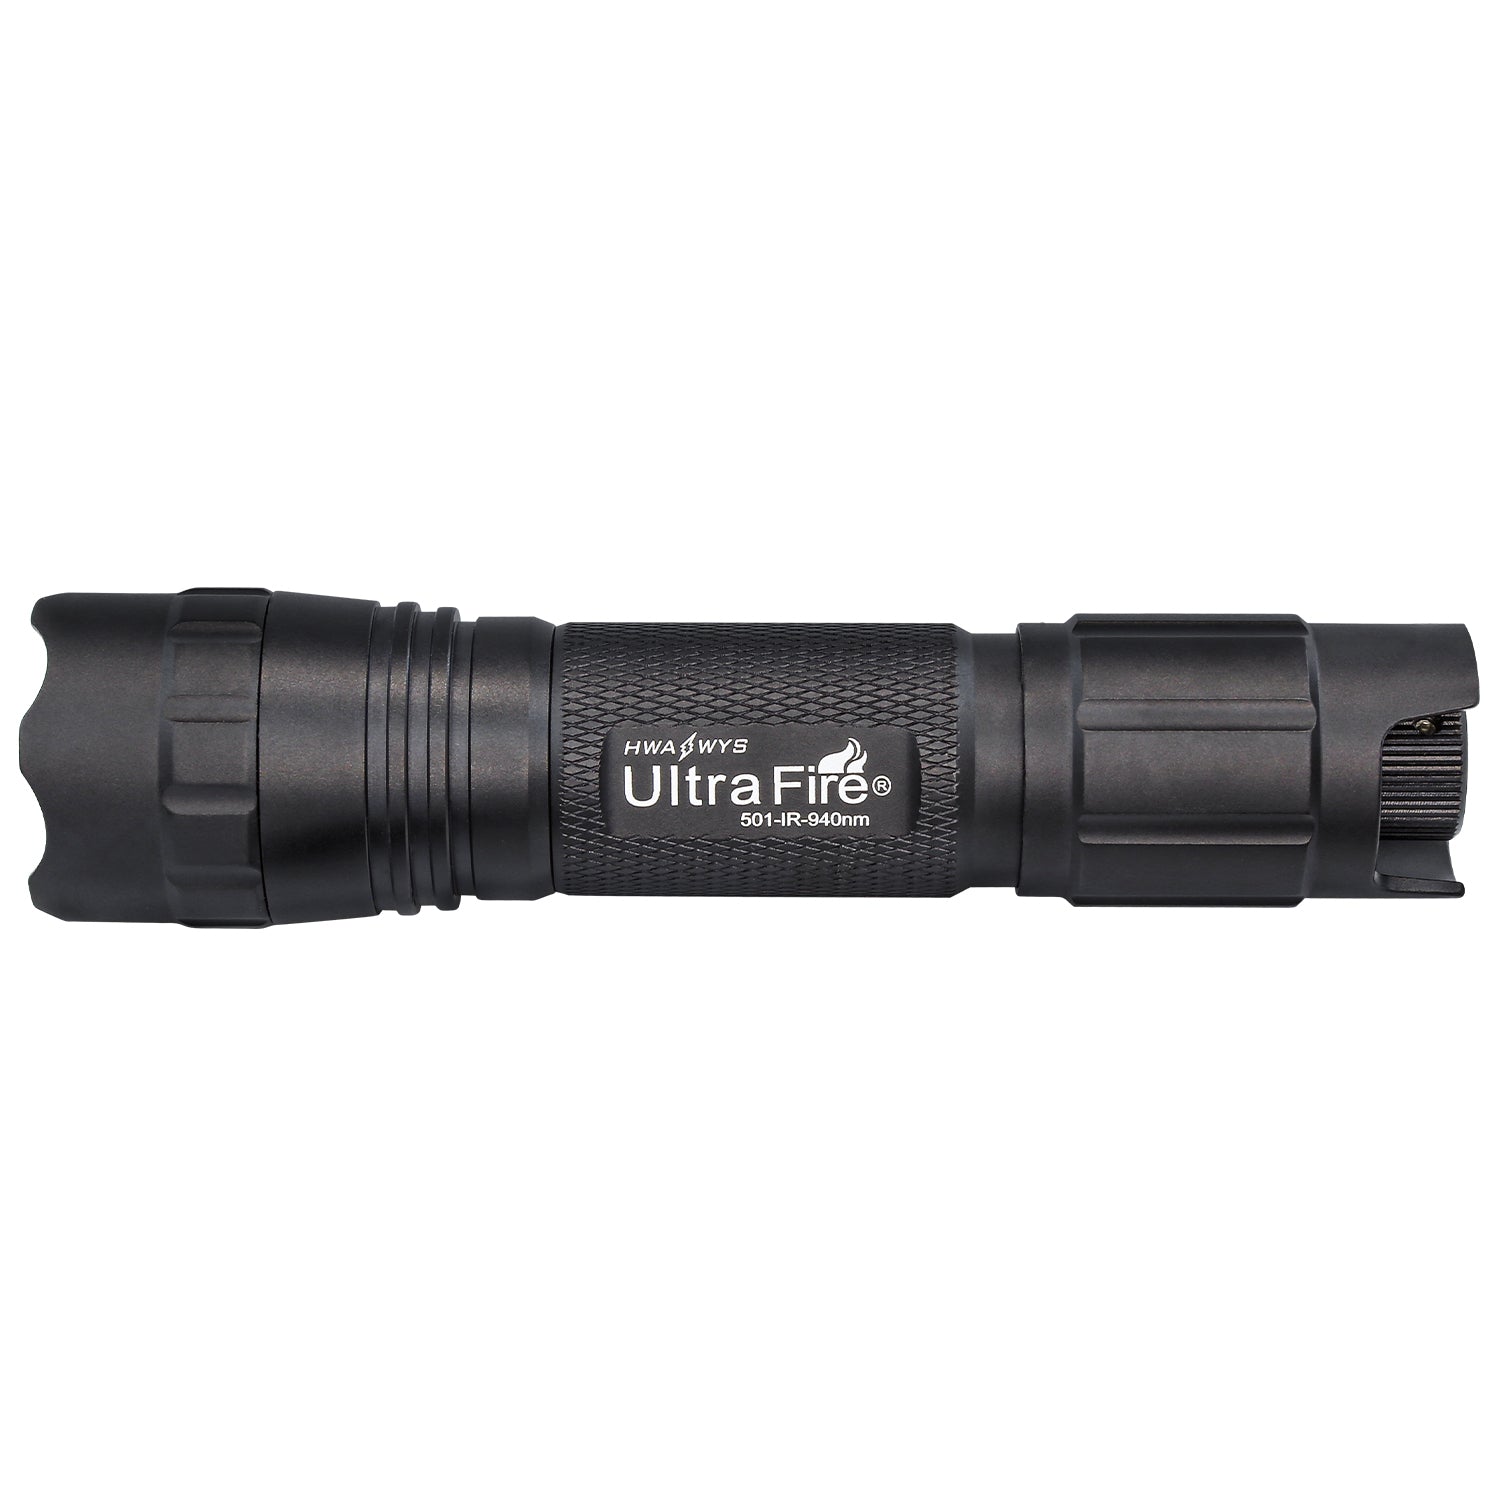 501-IR-940nm (Infrared) - UltraFire